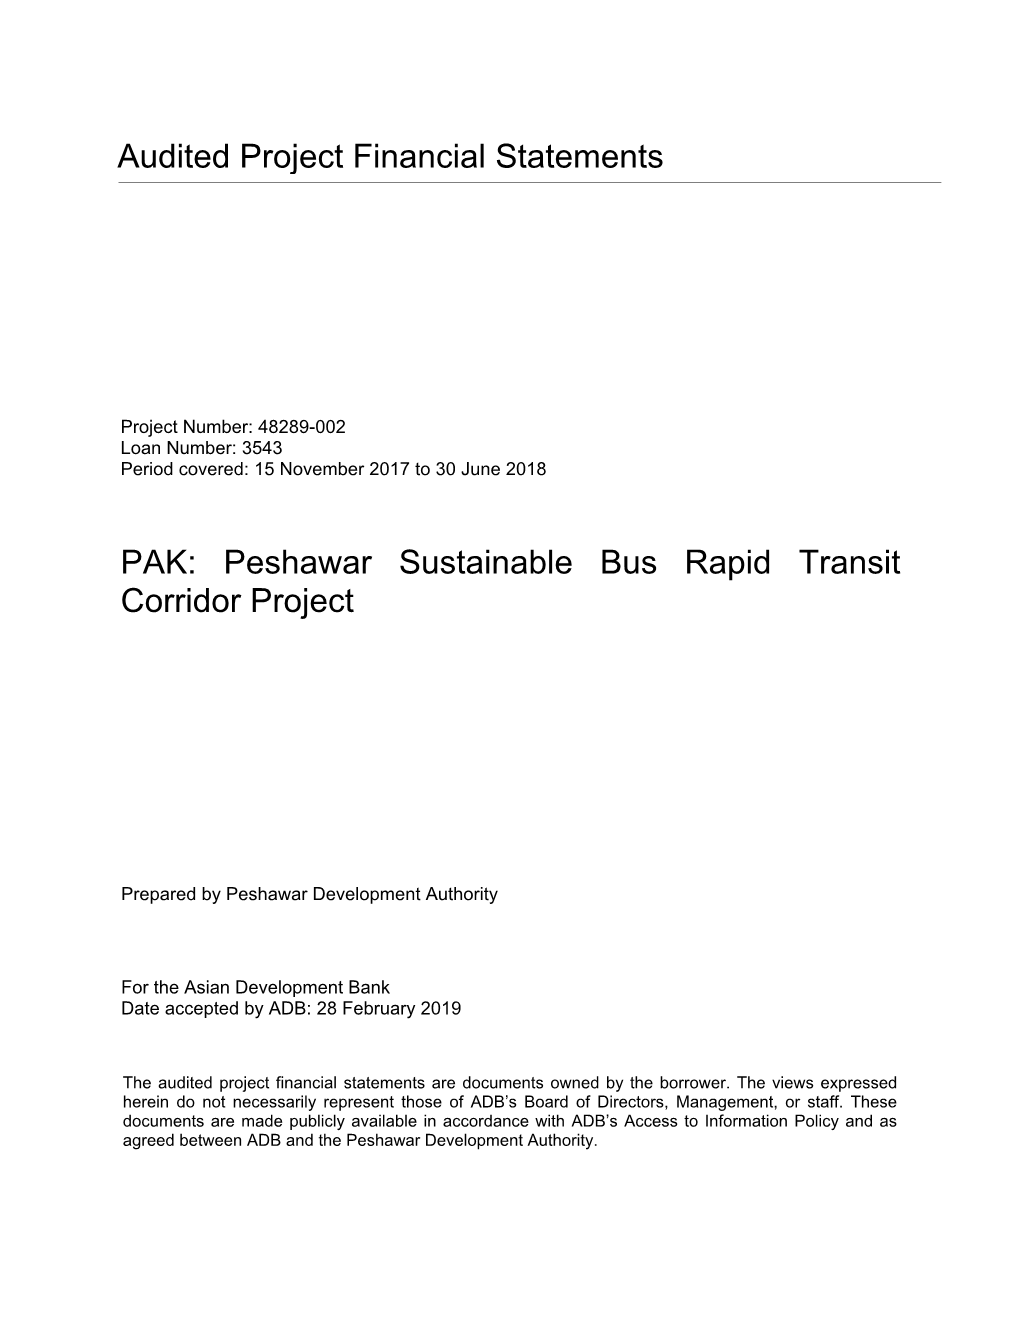 48289-002: Peshawar Sustainable Bus Rapid Transit Corridor Project